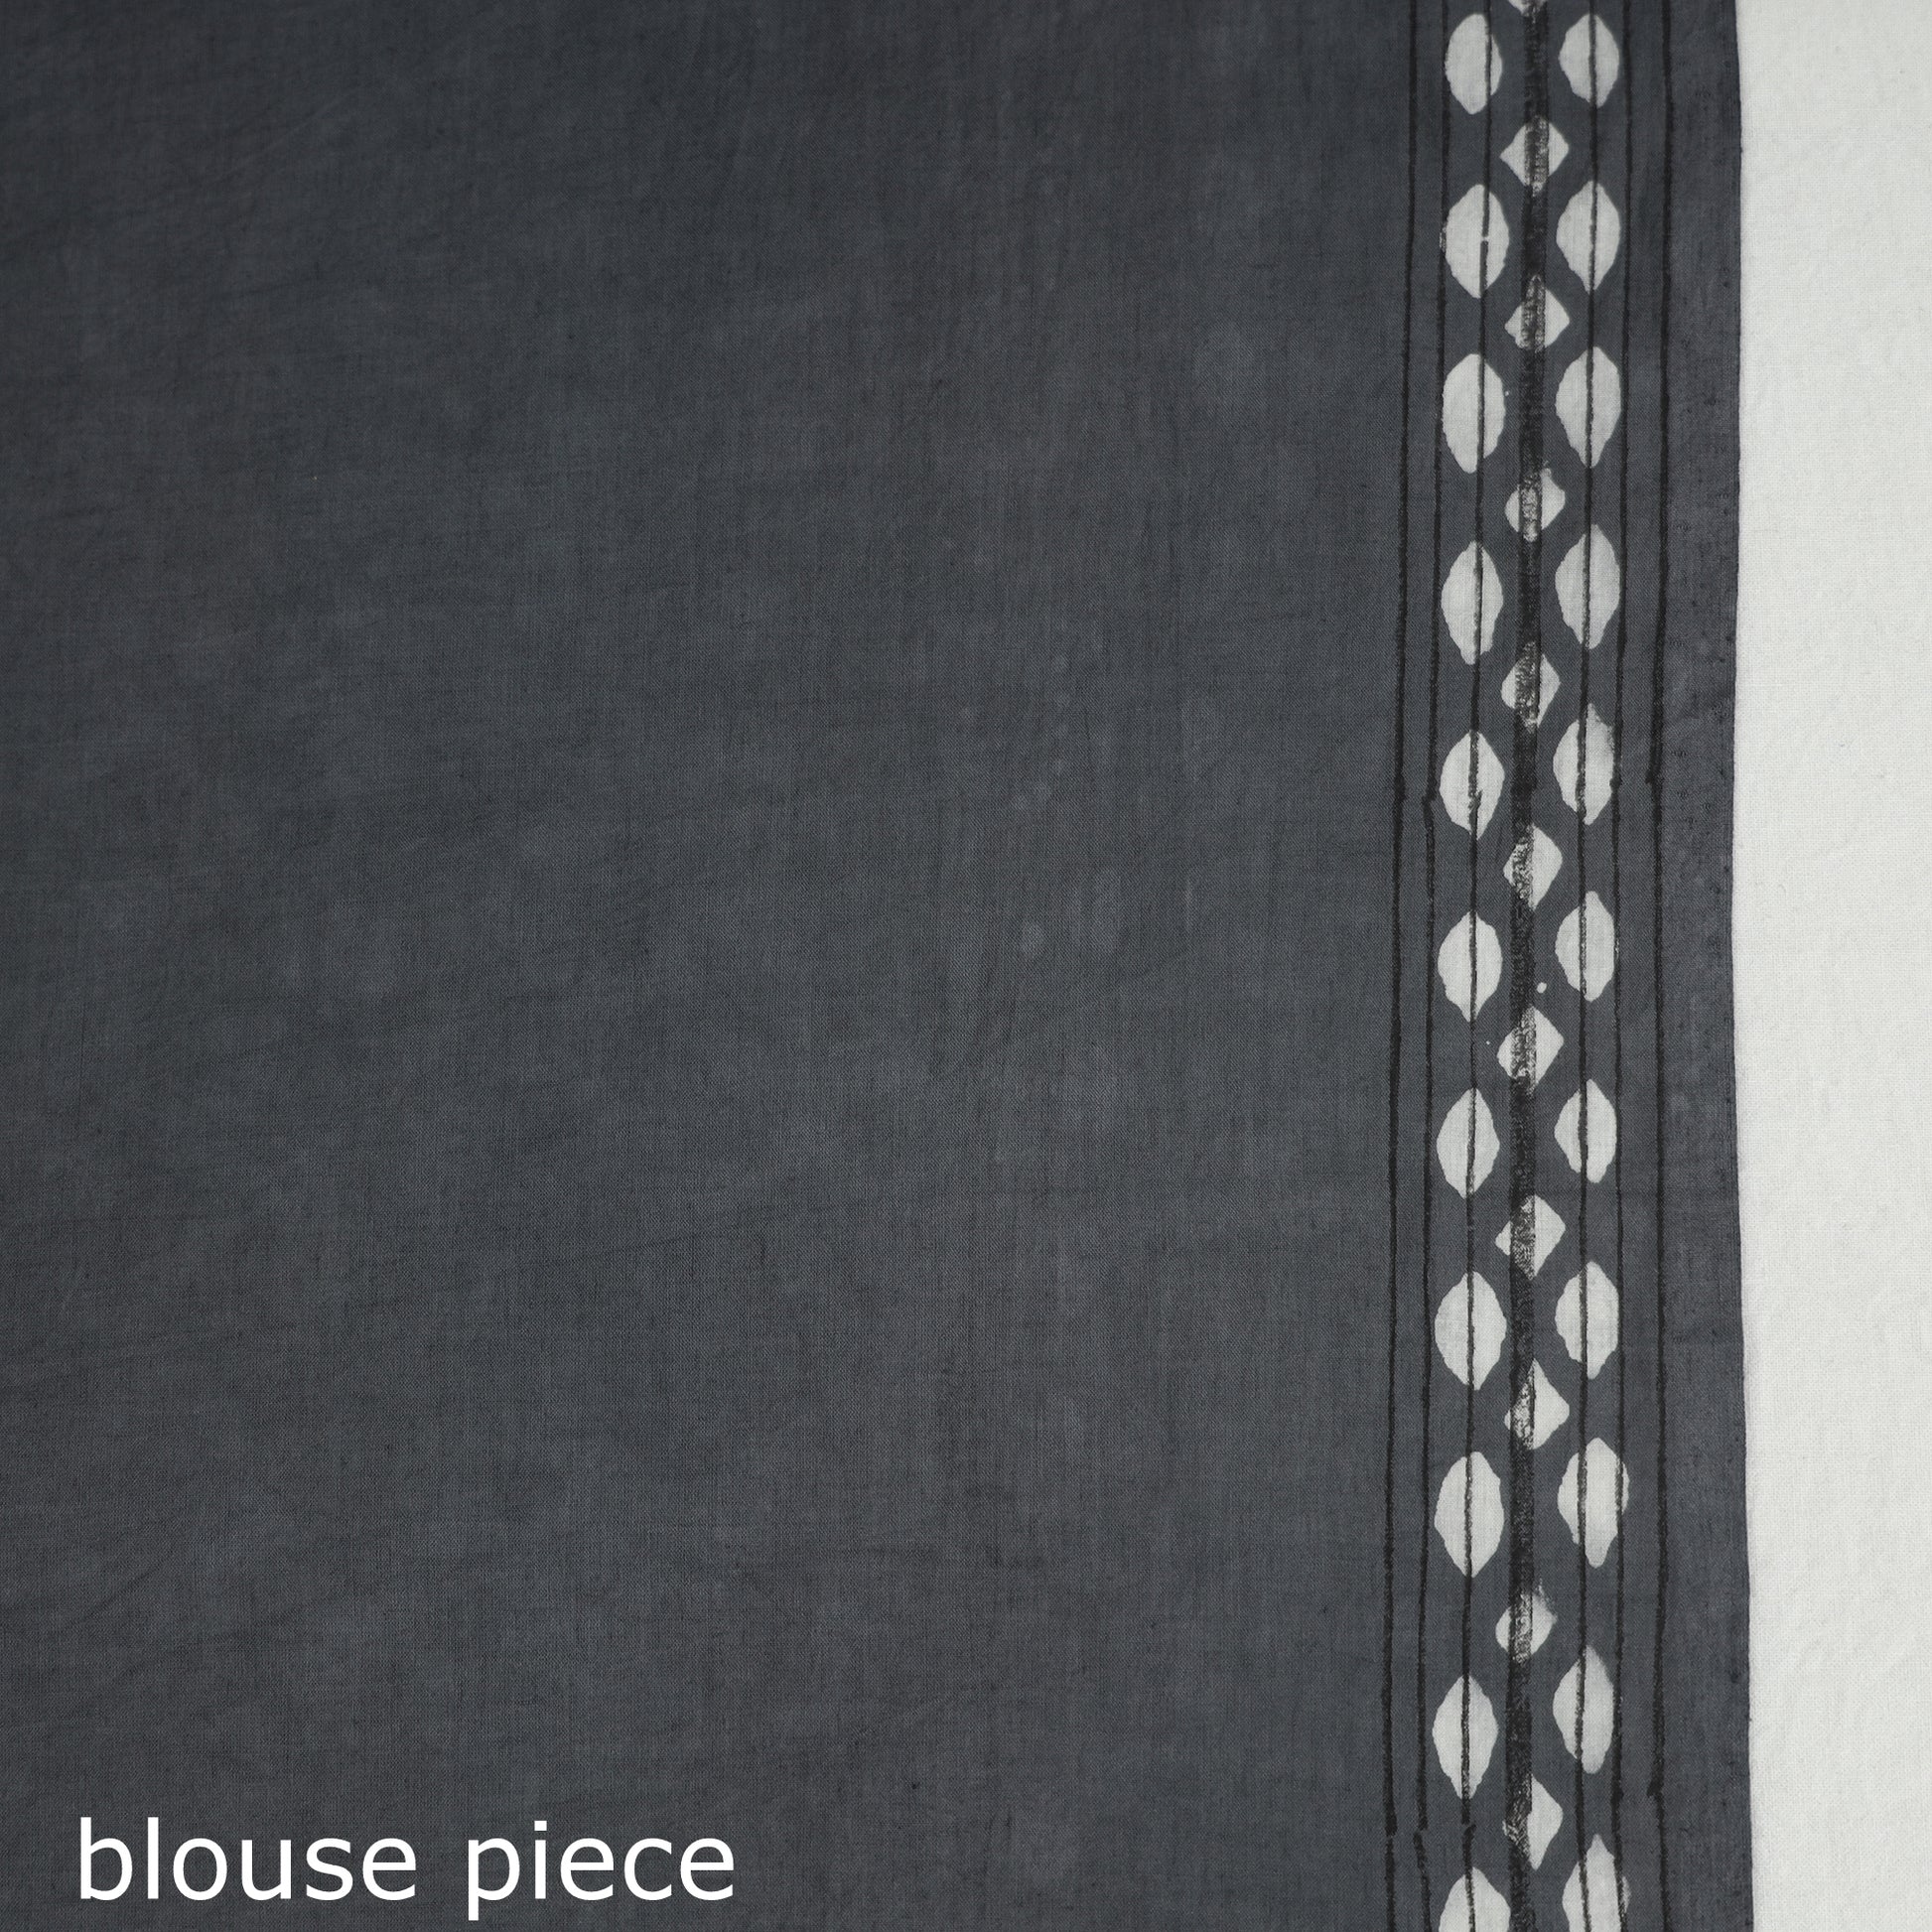 block printed saree